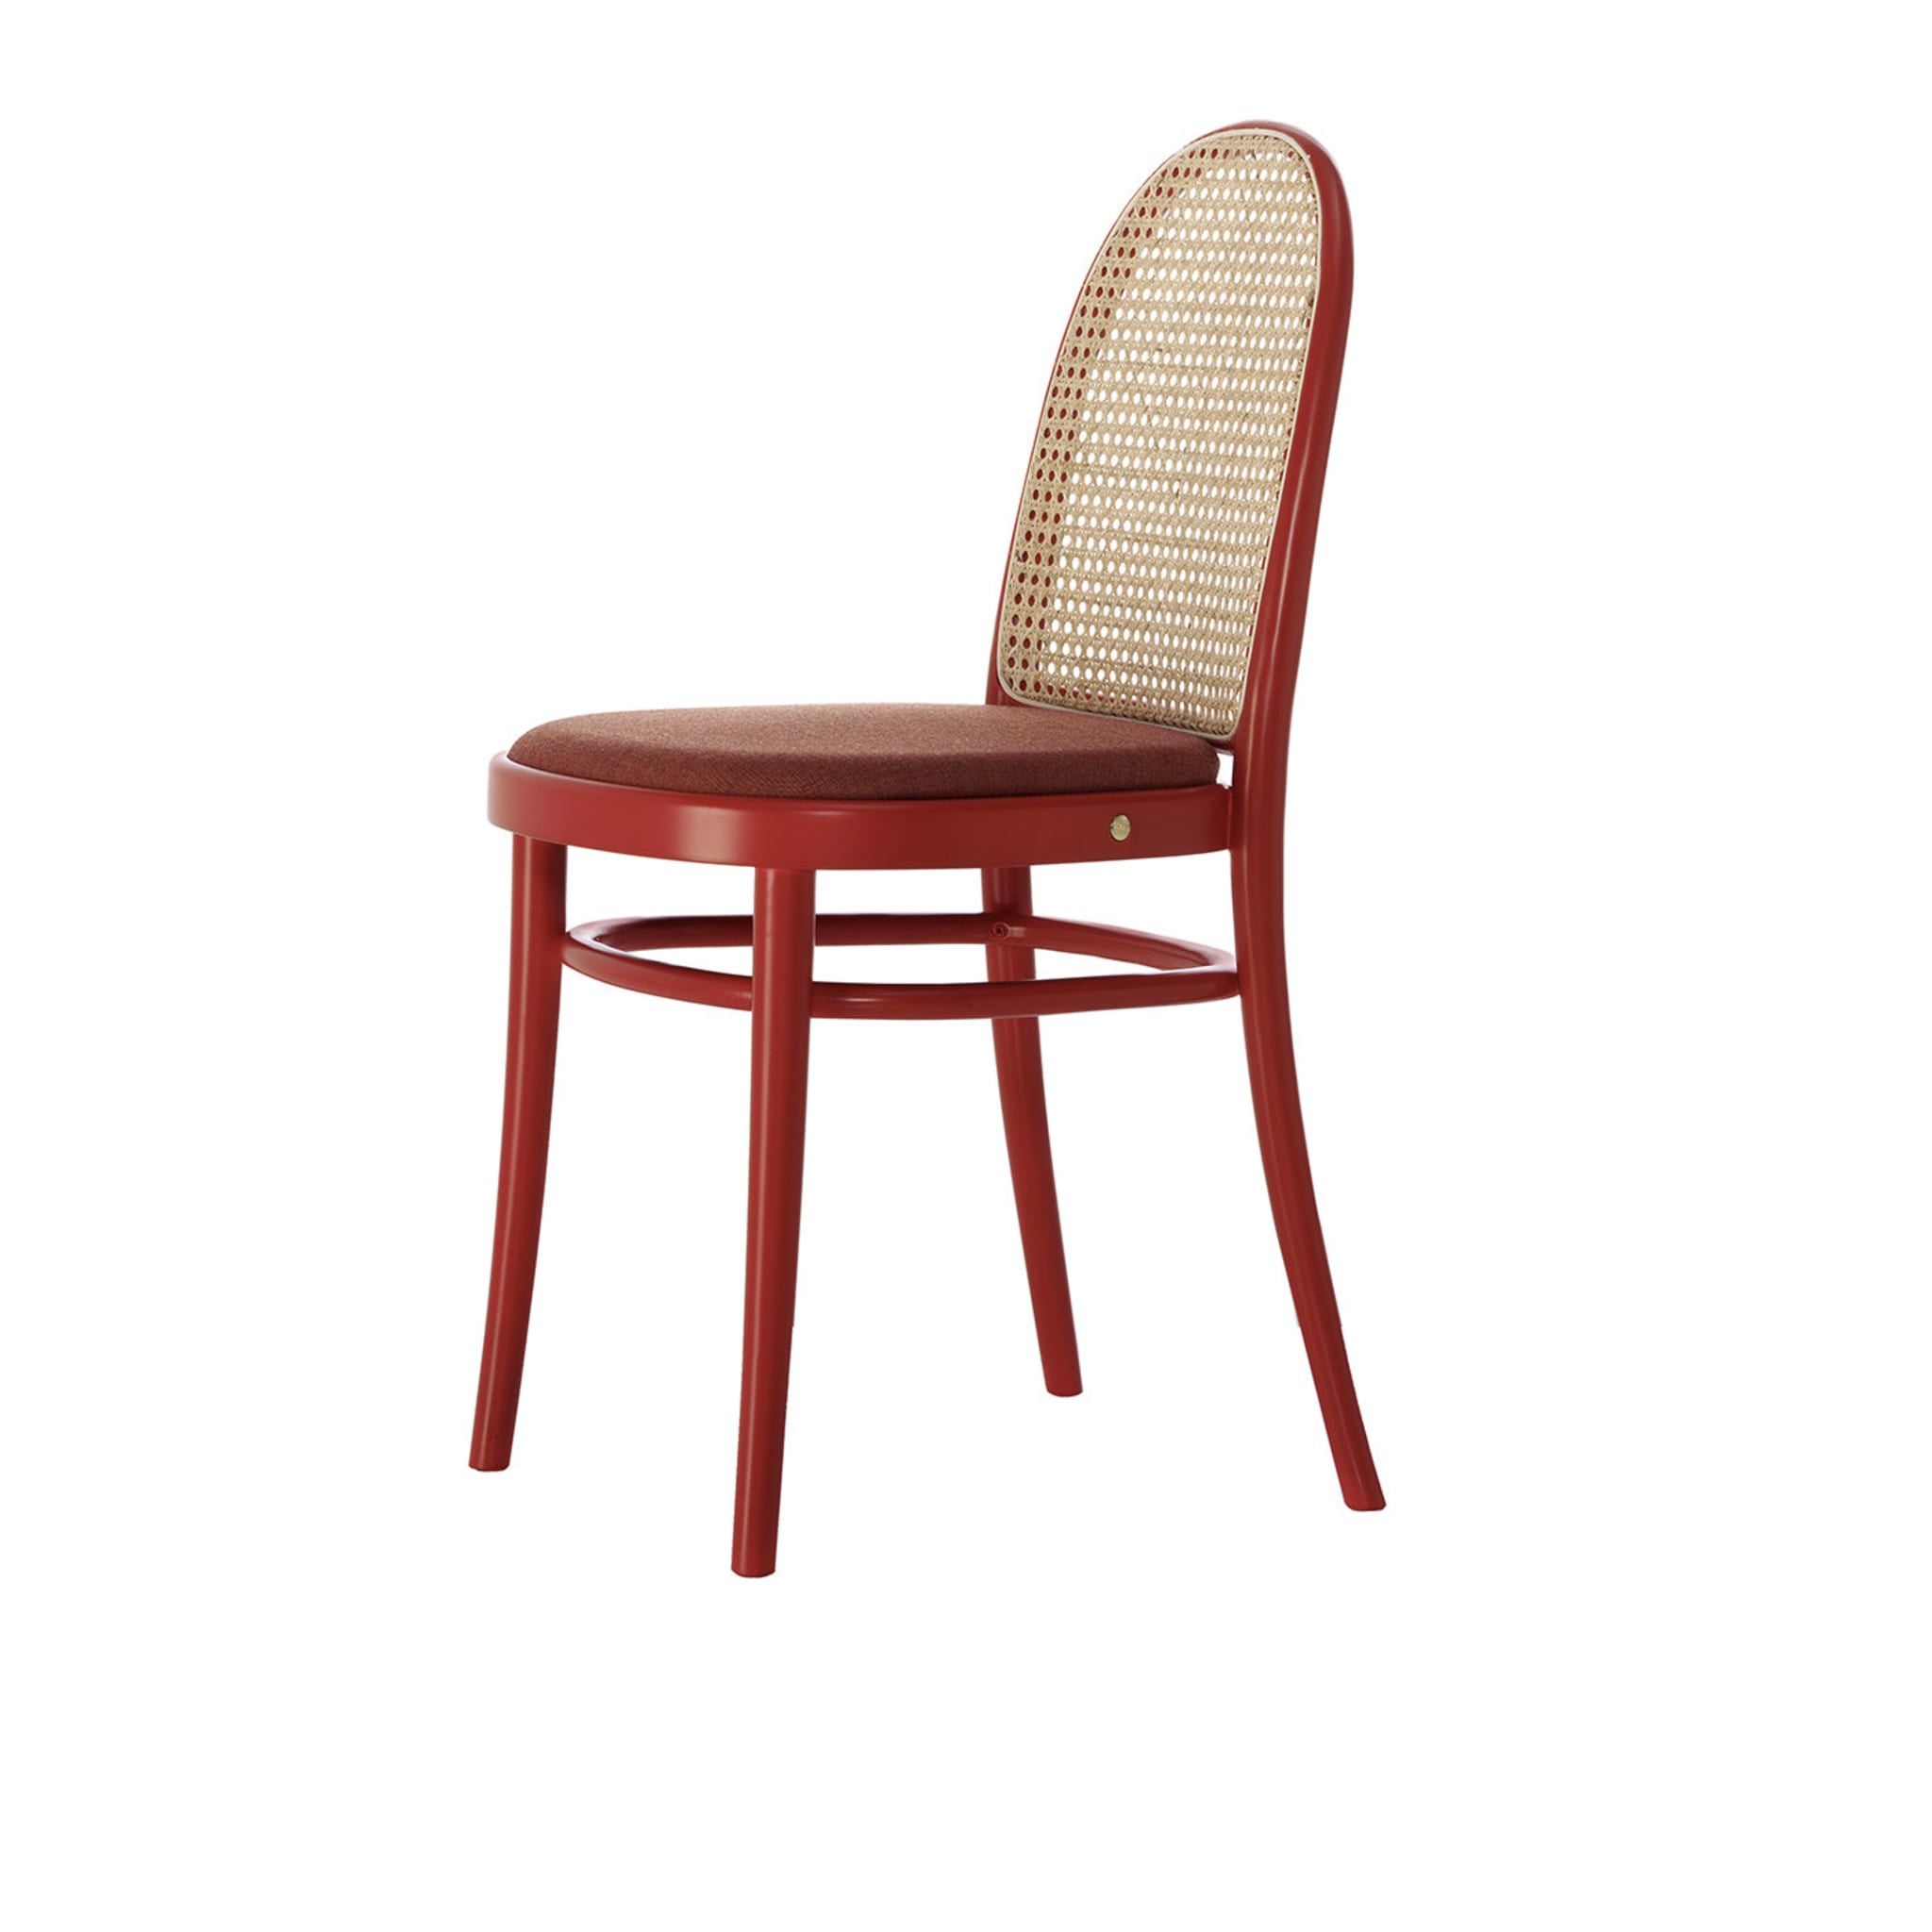 Morris Red Low Chair by GamFratesi - Alternative view 1